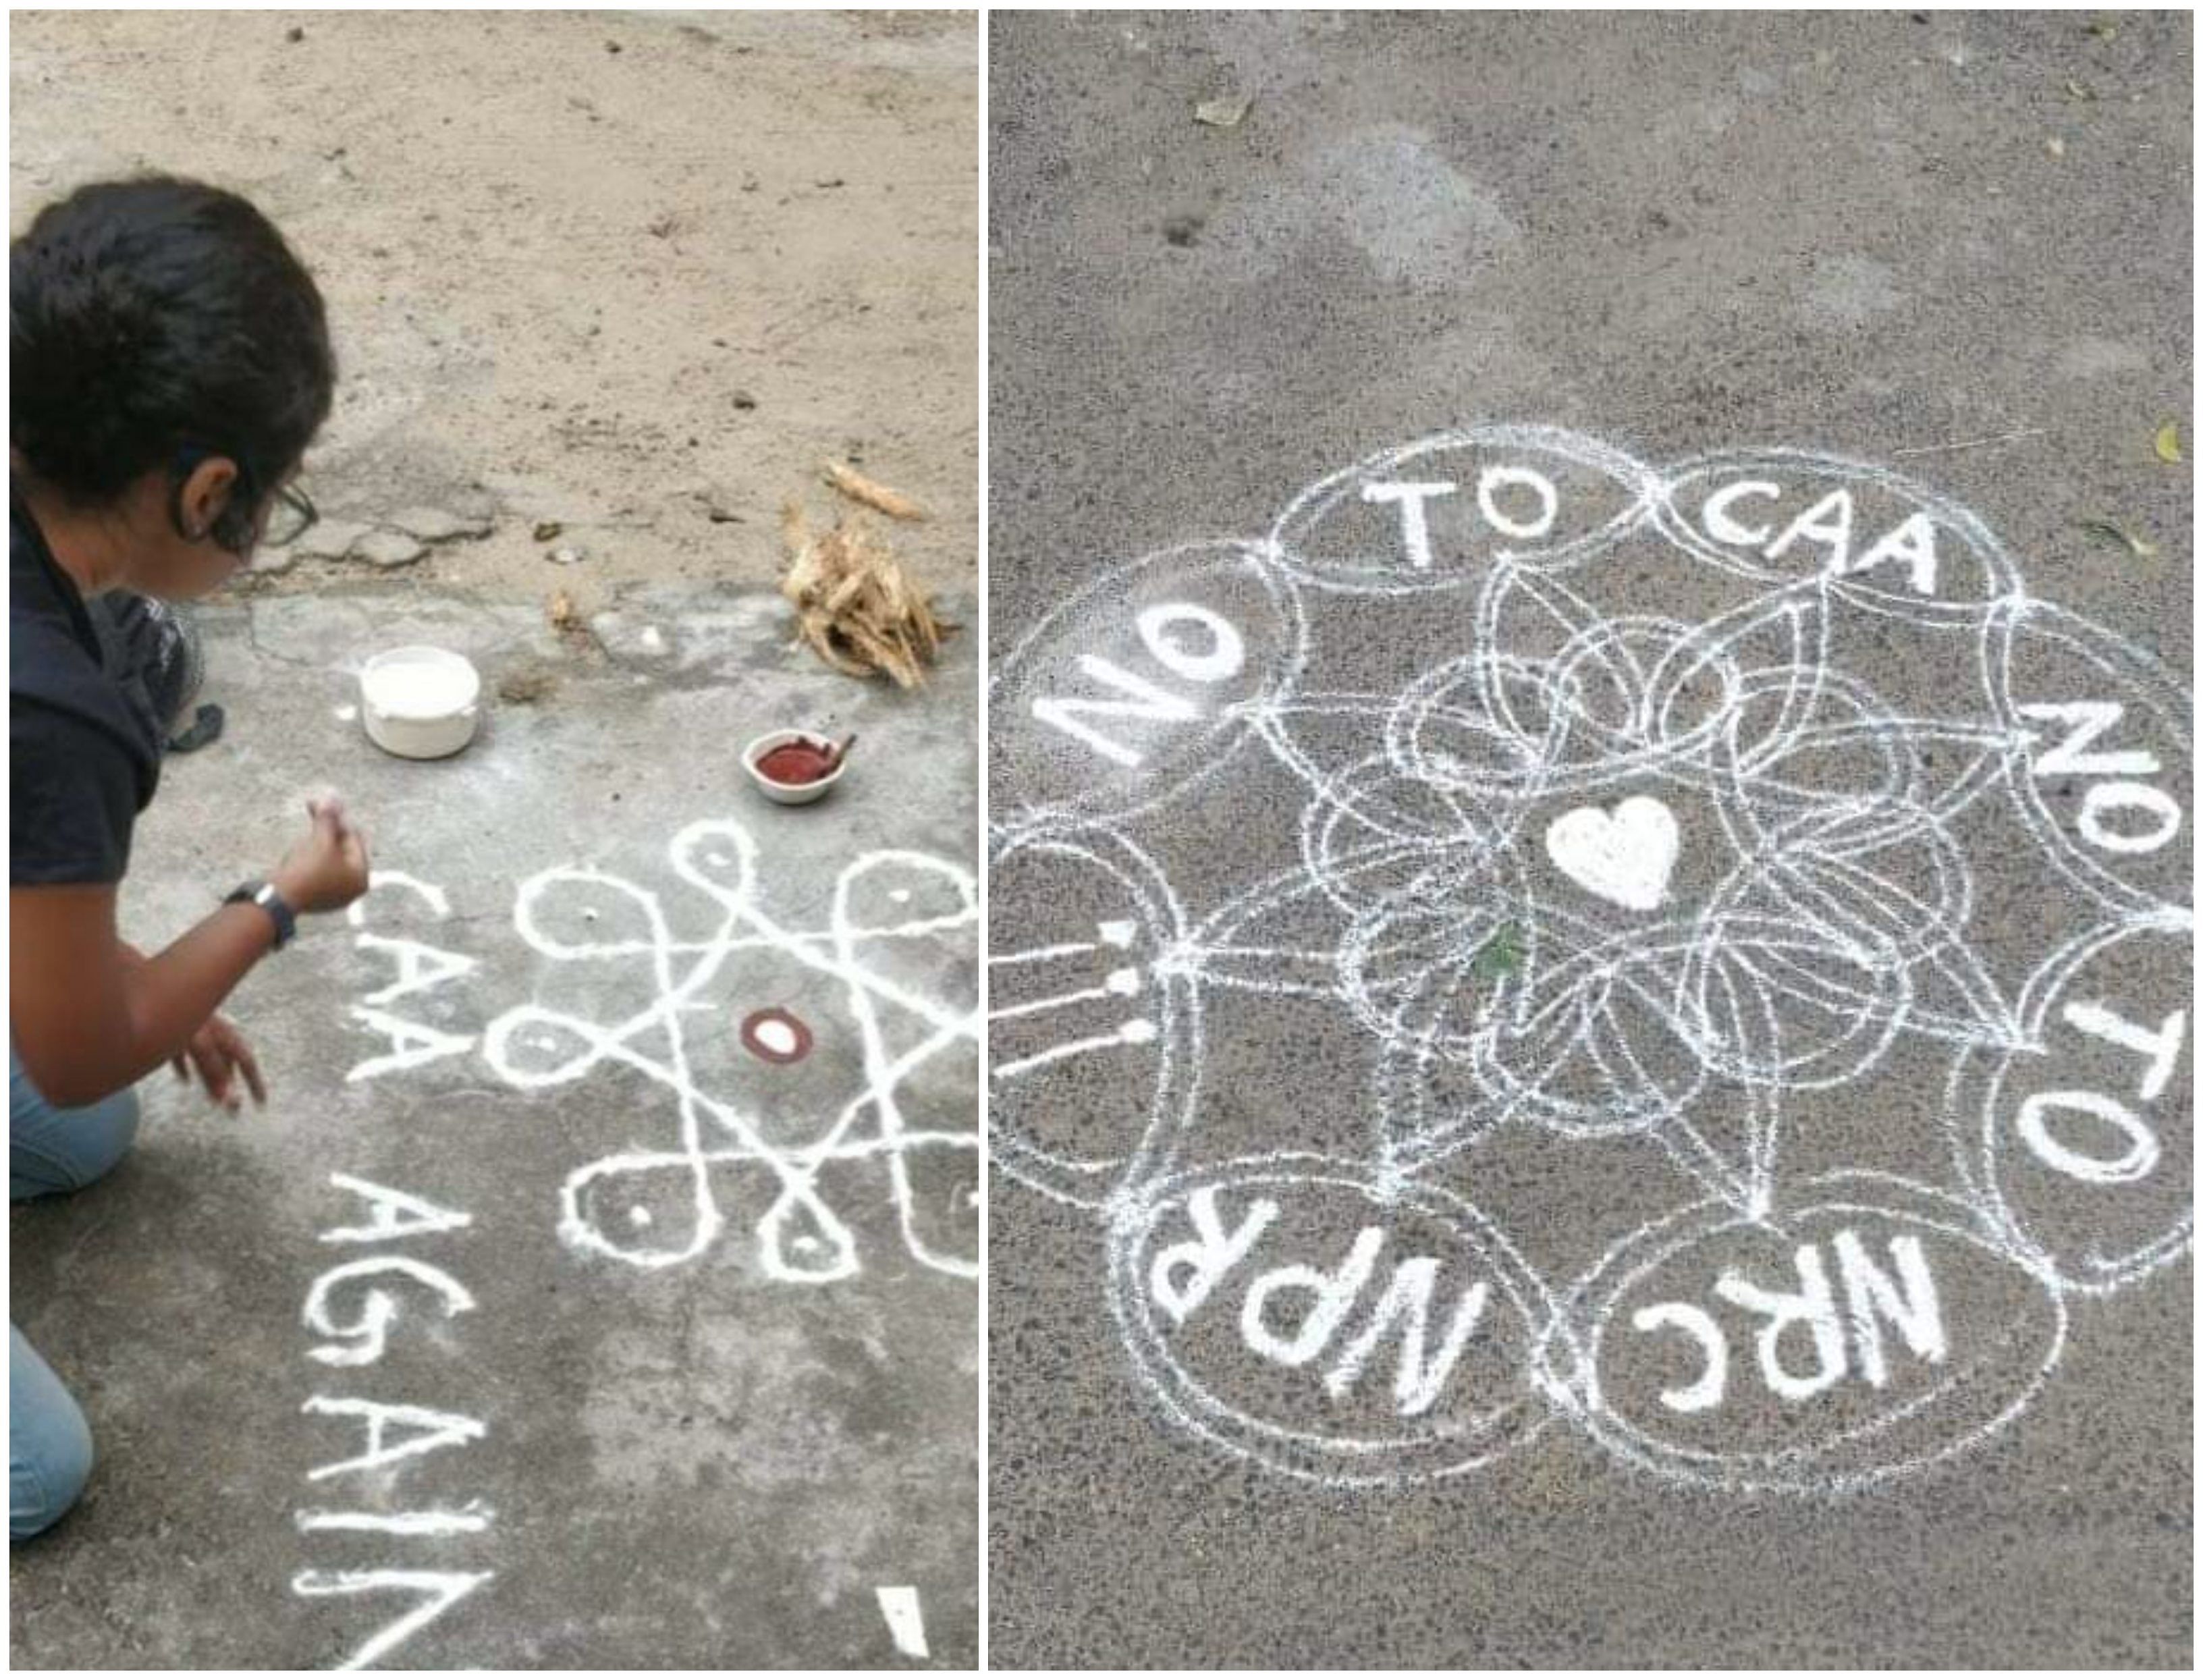 The women had gathered at Besant Nagar on Sunday morning and drew kolams (rangolis) with words like “No to CAA, no to NRC”.